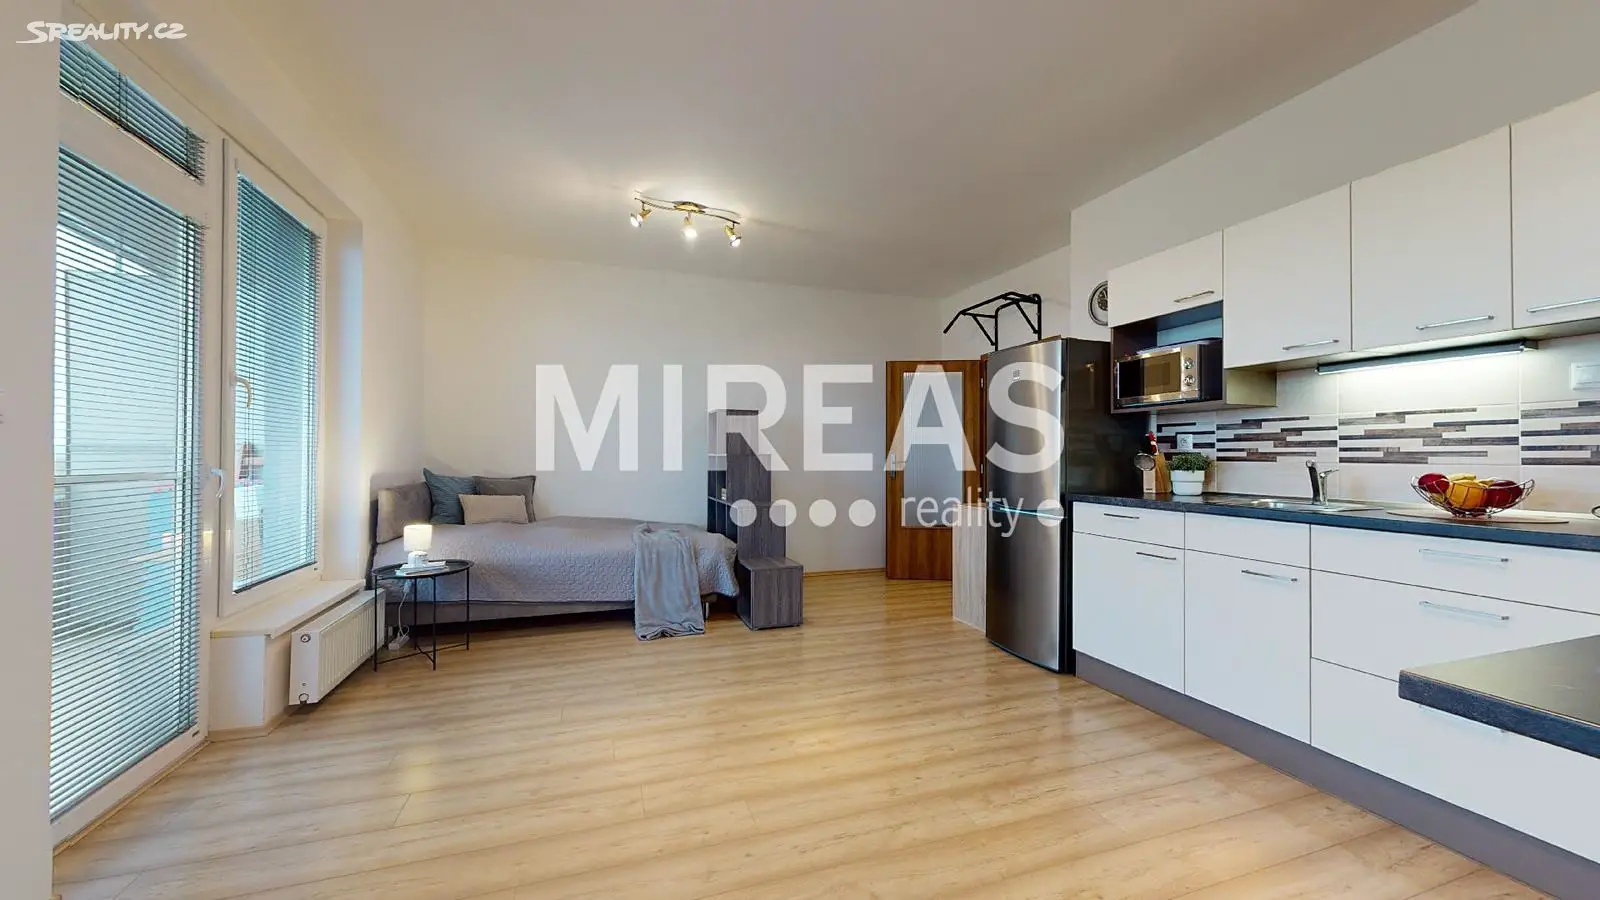 Pronájem bytu 1+kk 53 m², Mladá Boleslav - Michalovice, okres Mladá Boleslav